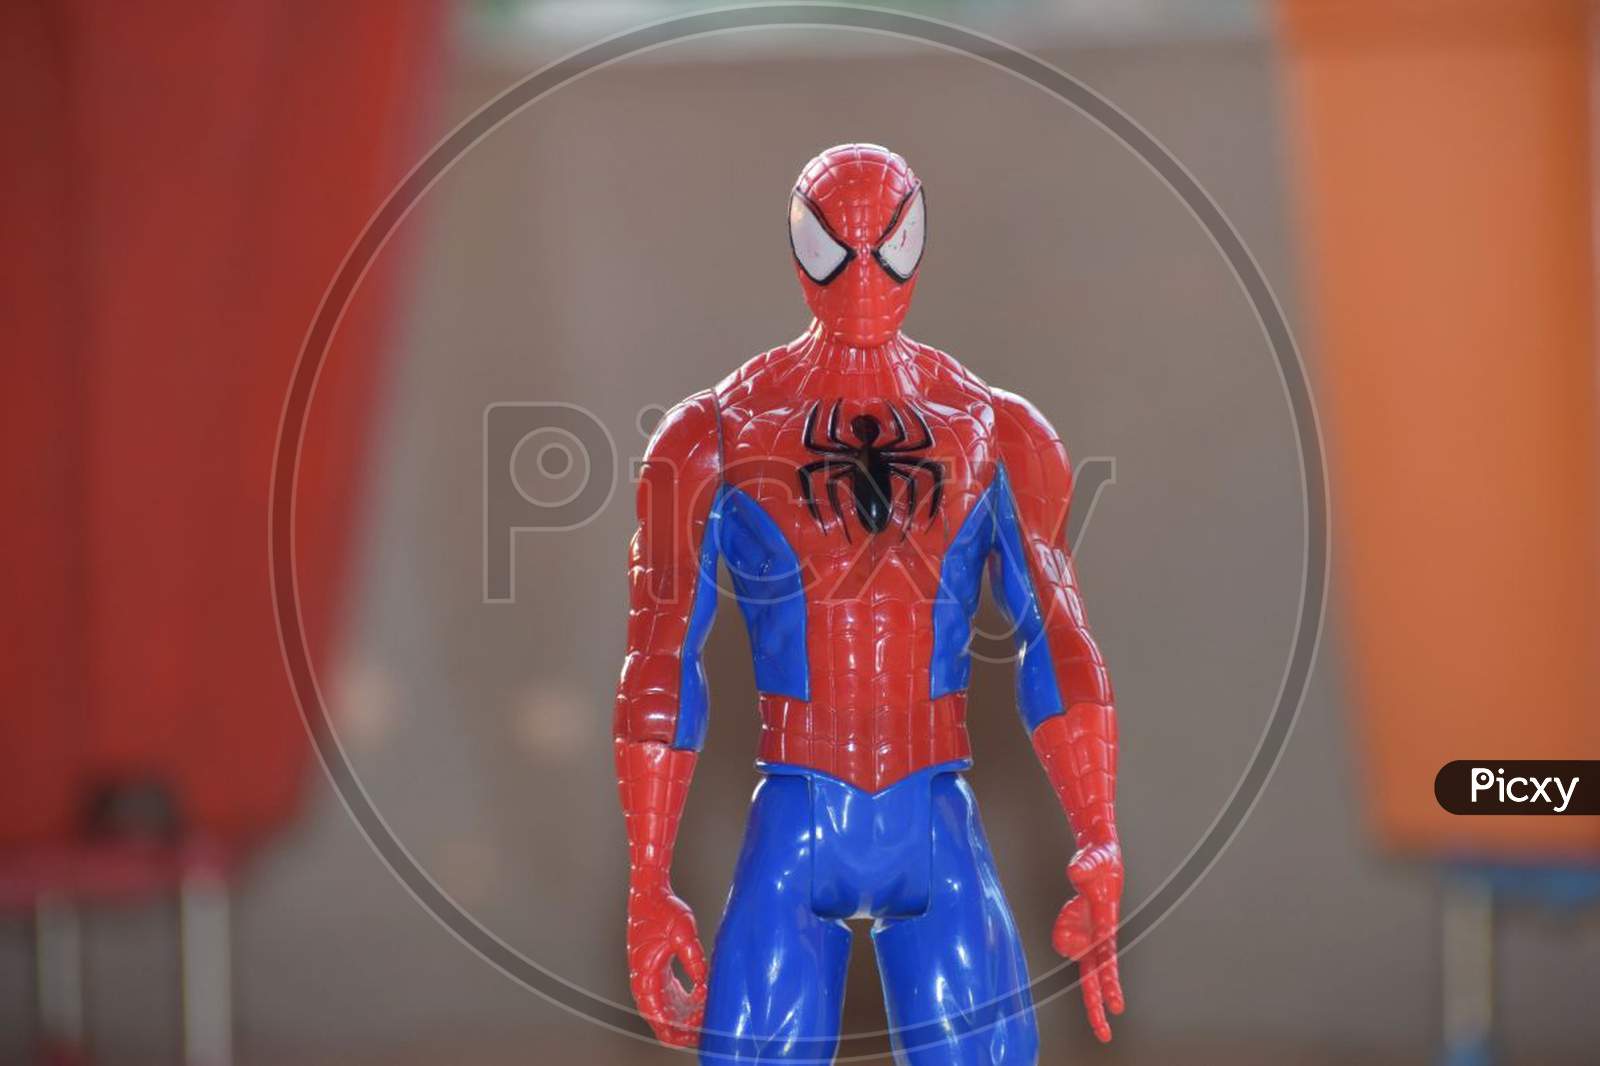 A superhero spiderman